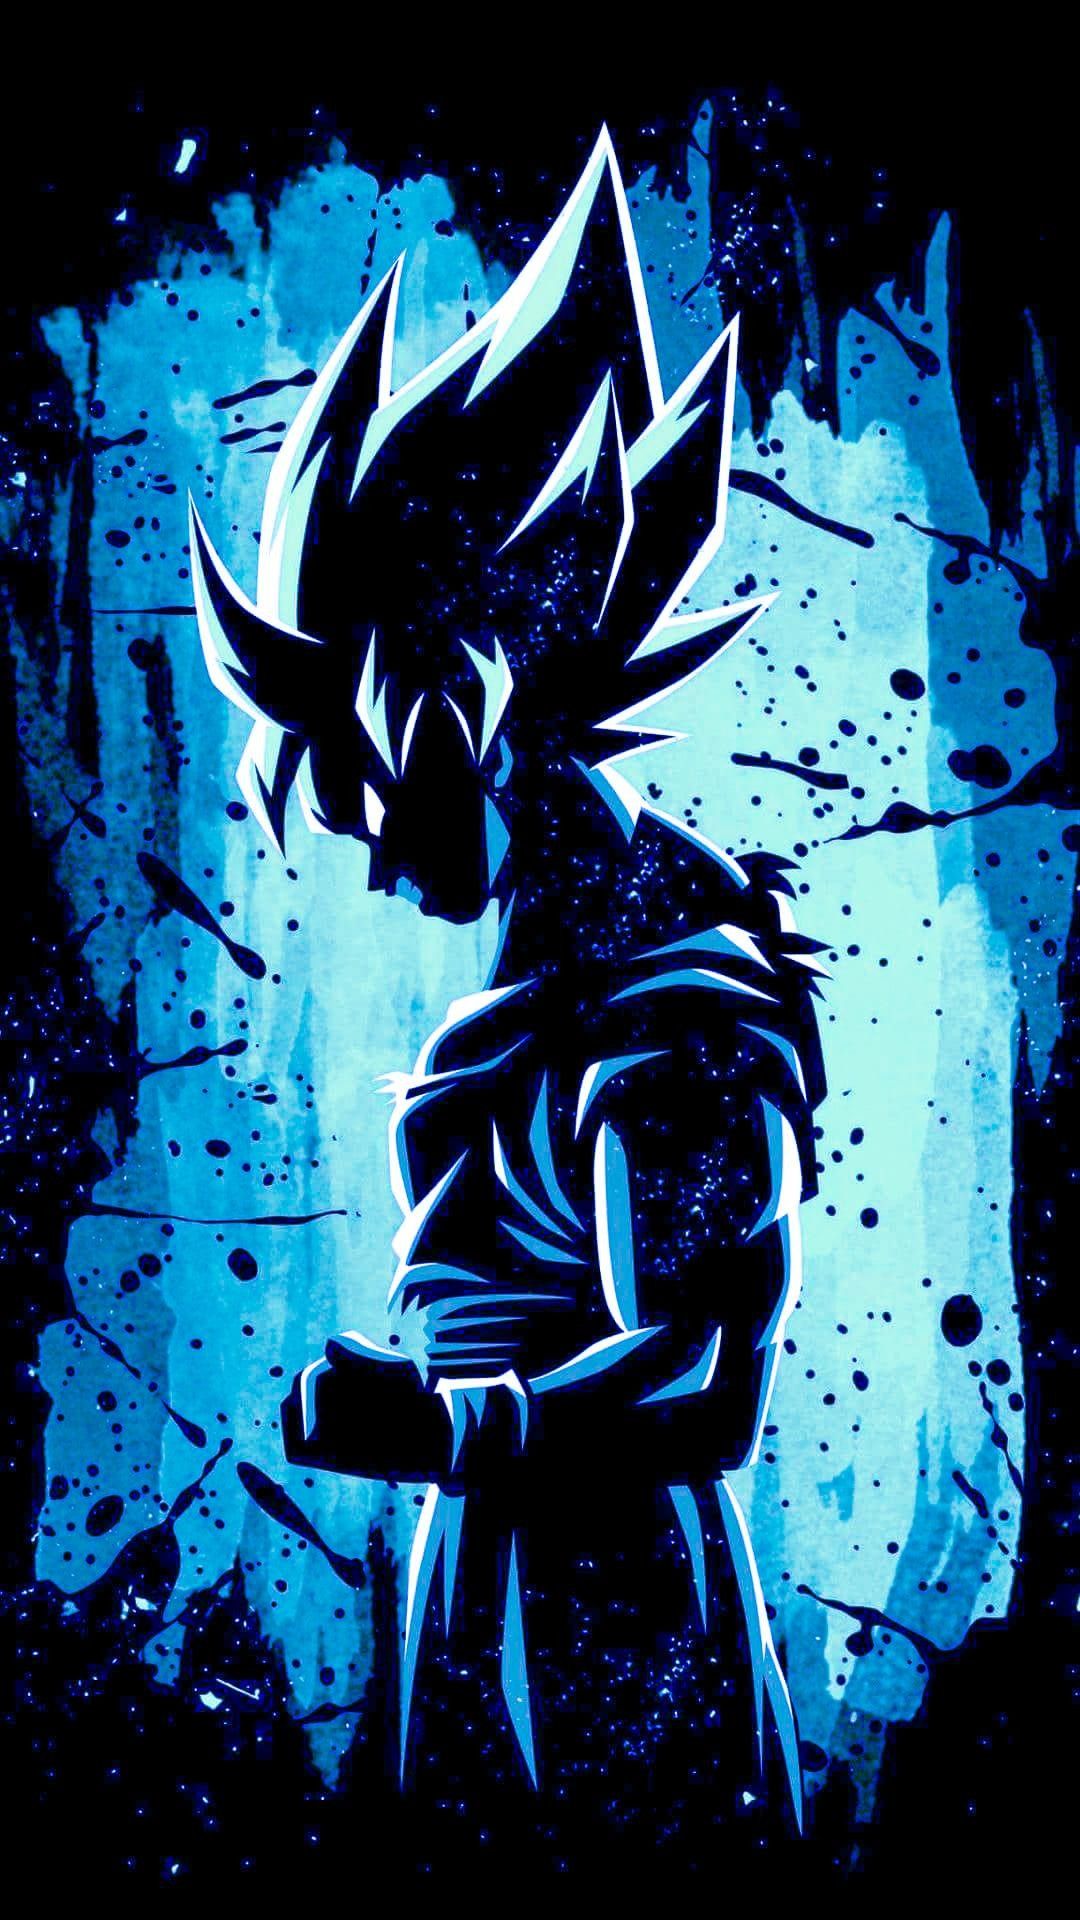 Wallpaper Goku